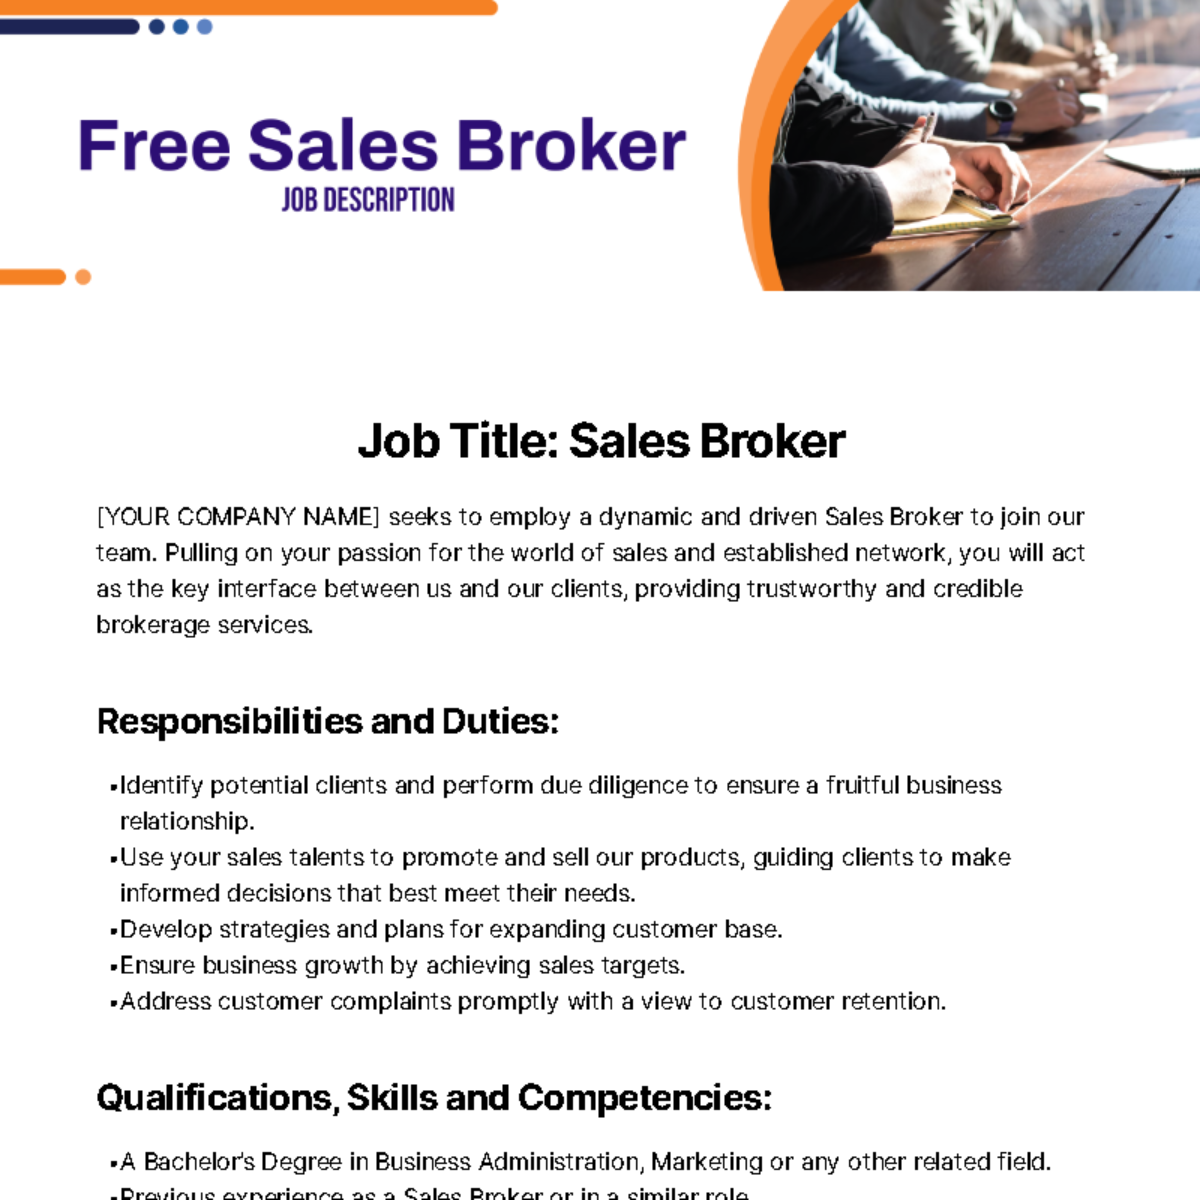 Free Sales Broker Job Description Template